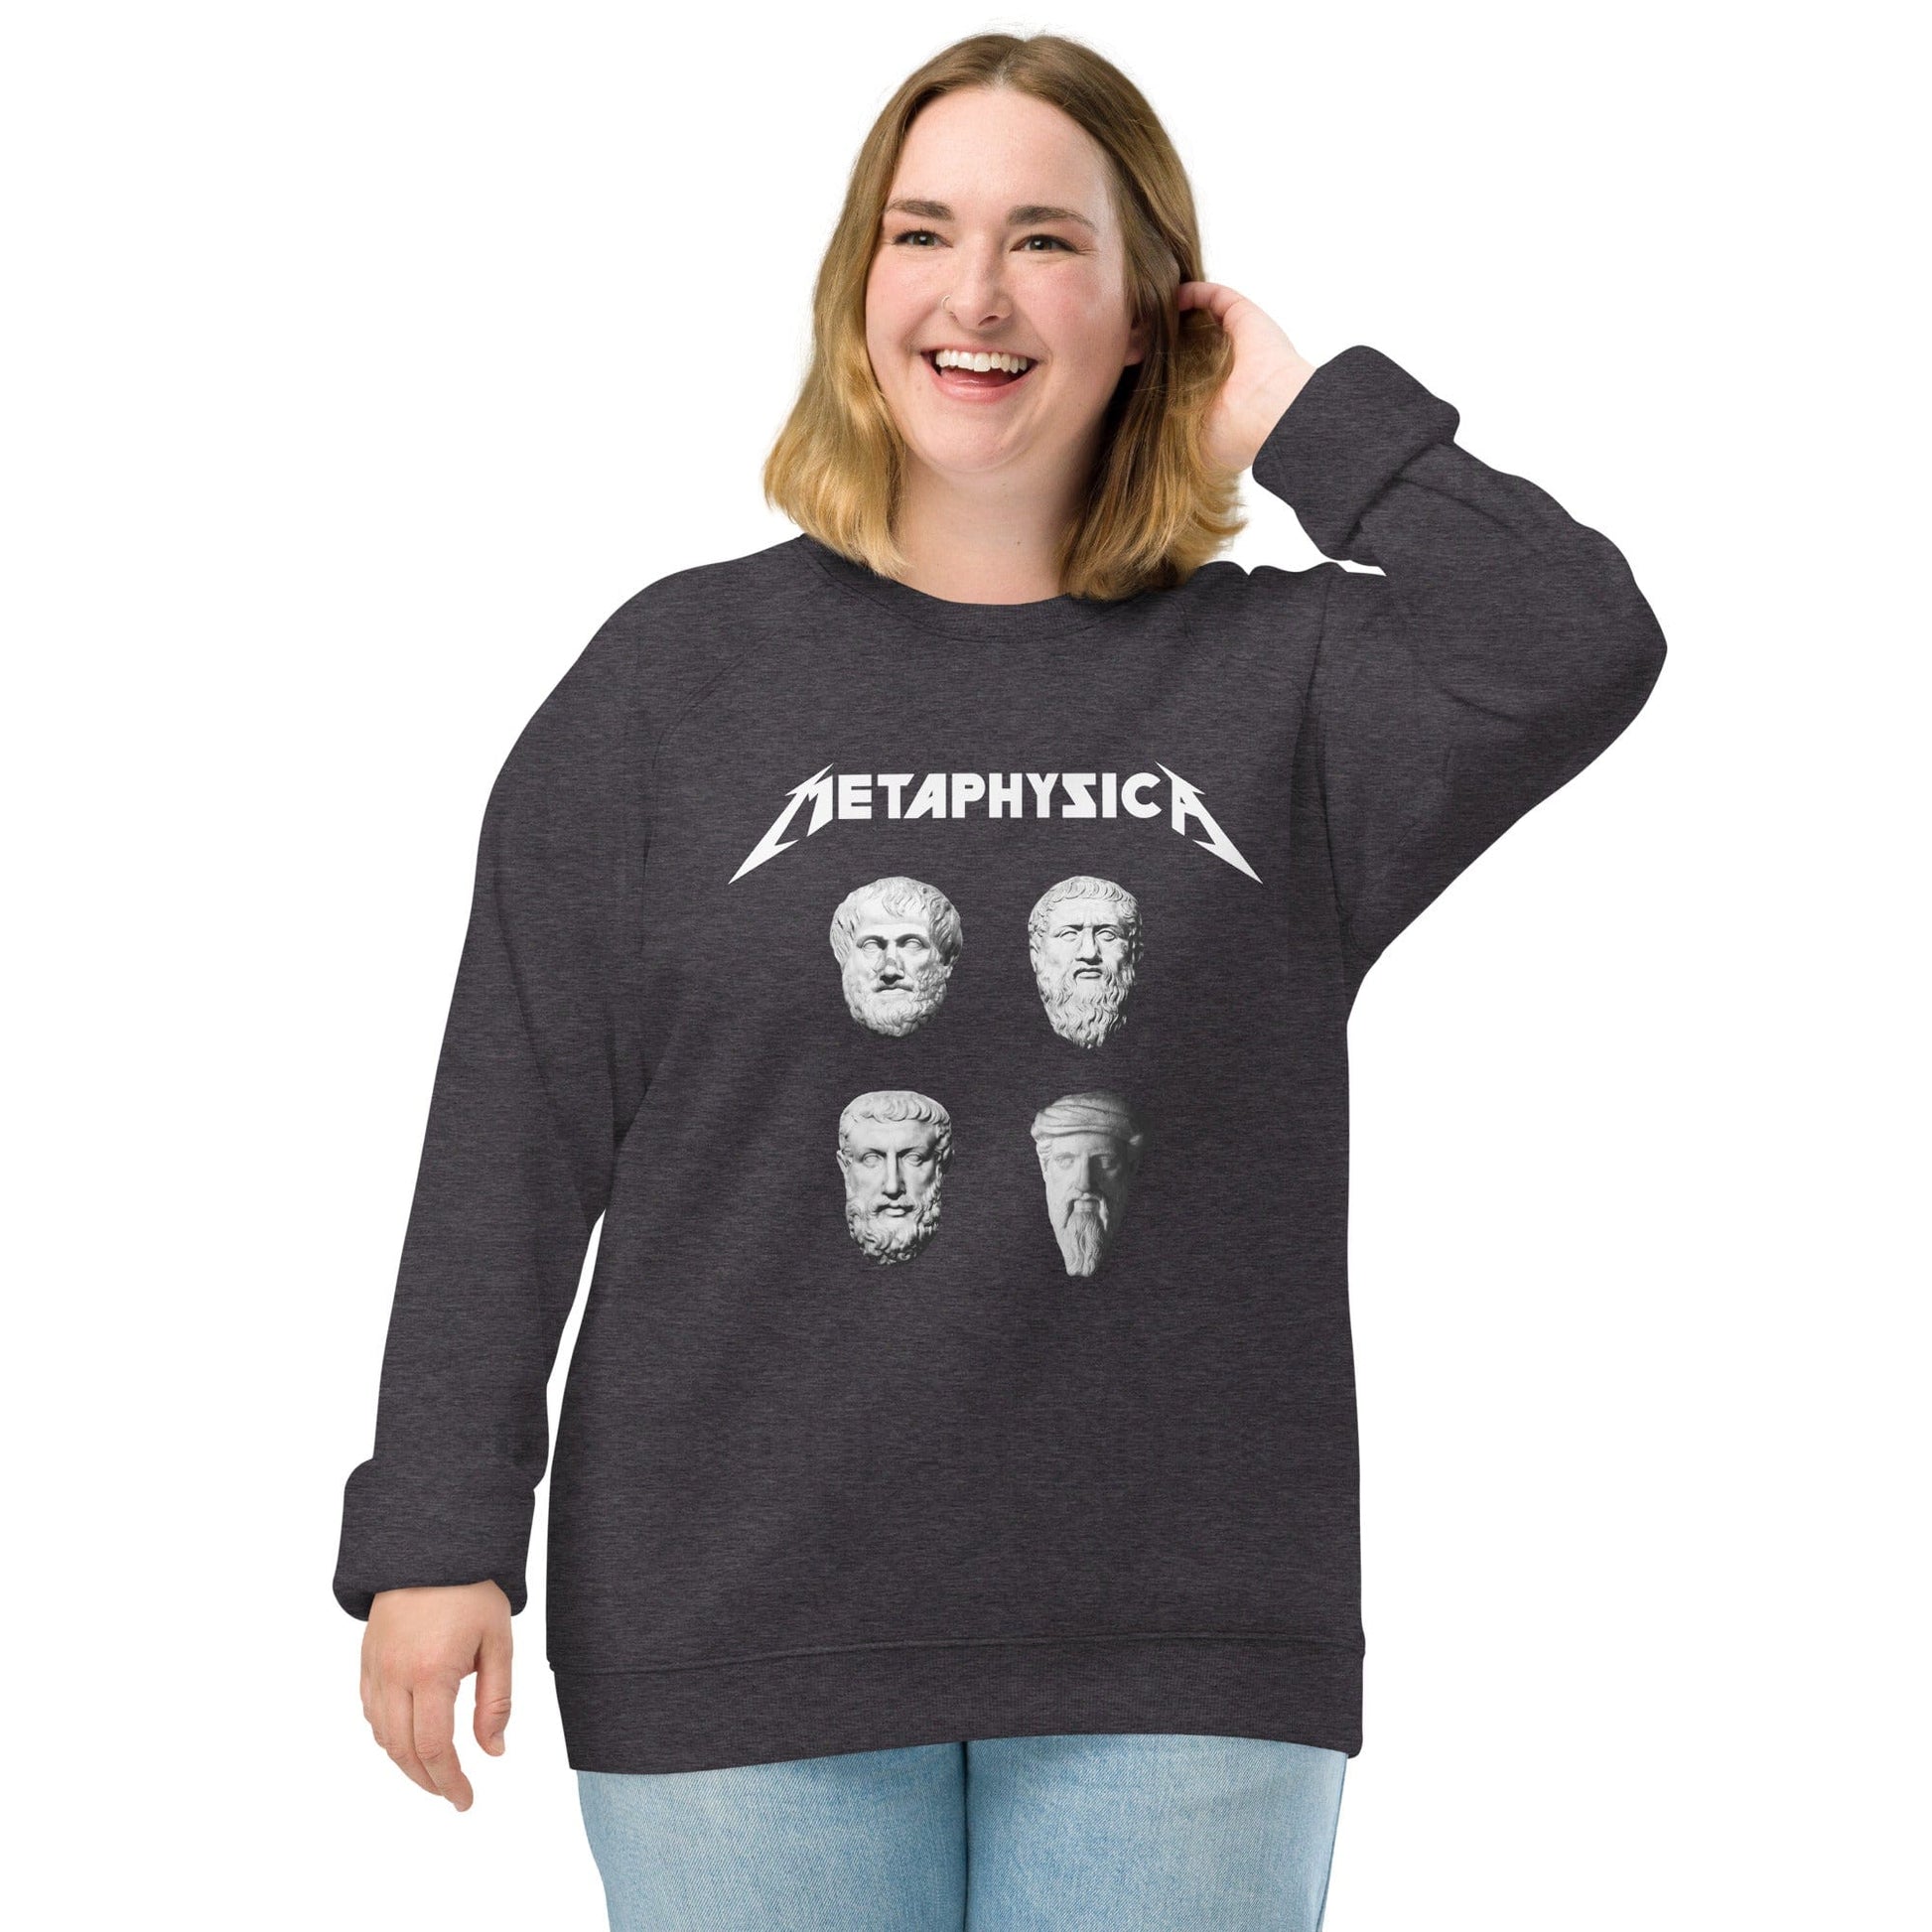 Metaphysica - The Four Wise Men - Eco Sweatshirt